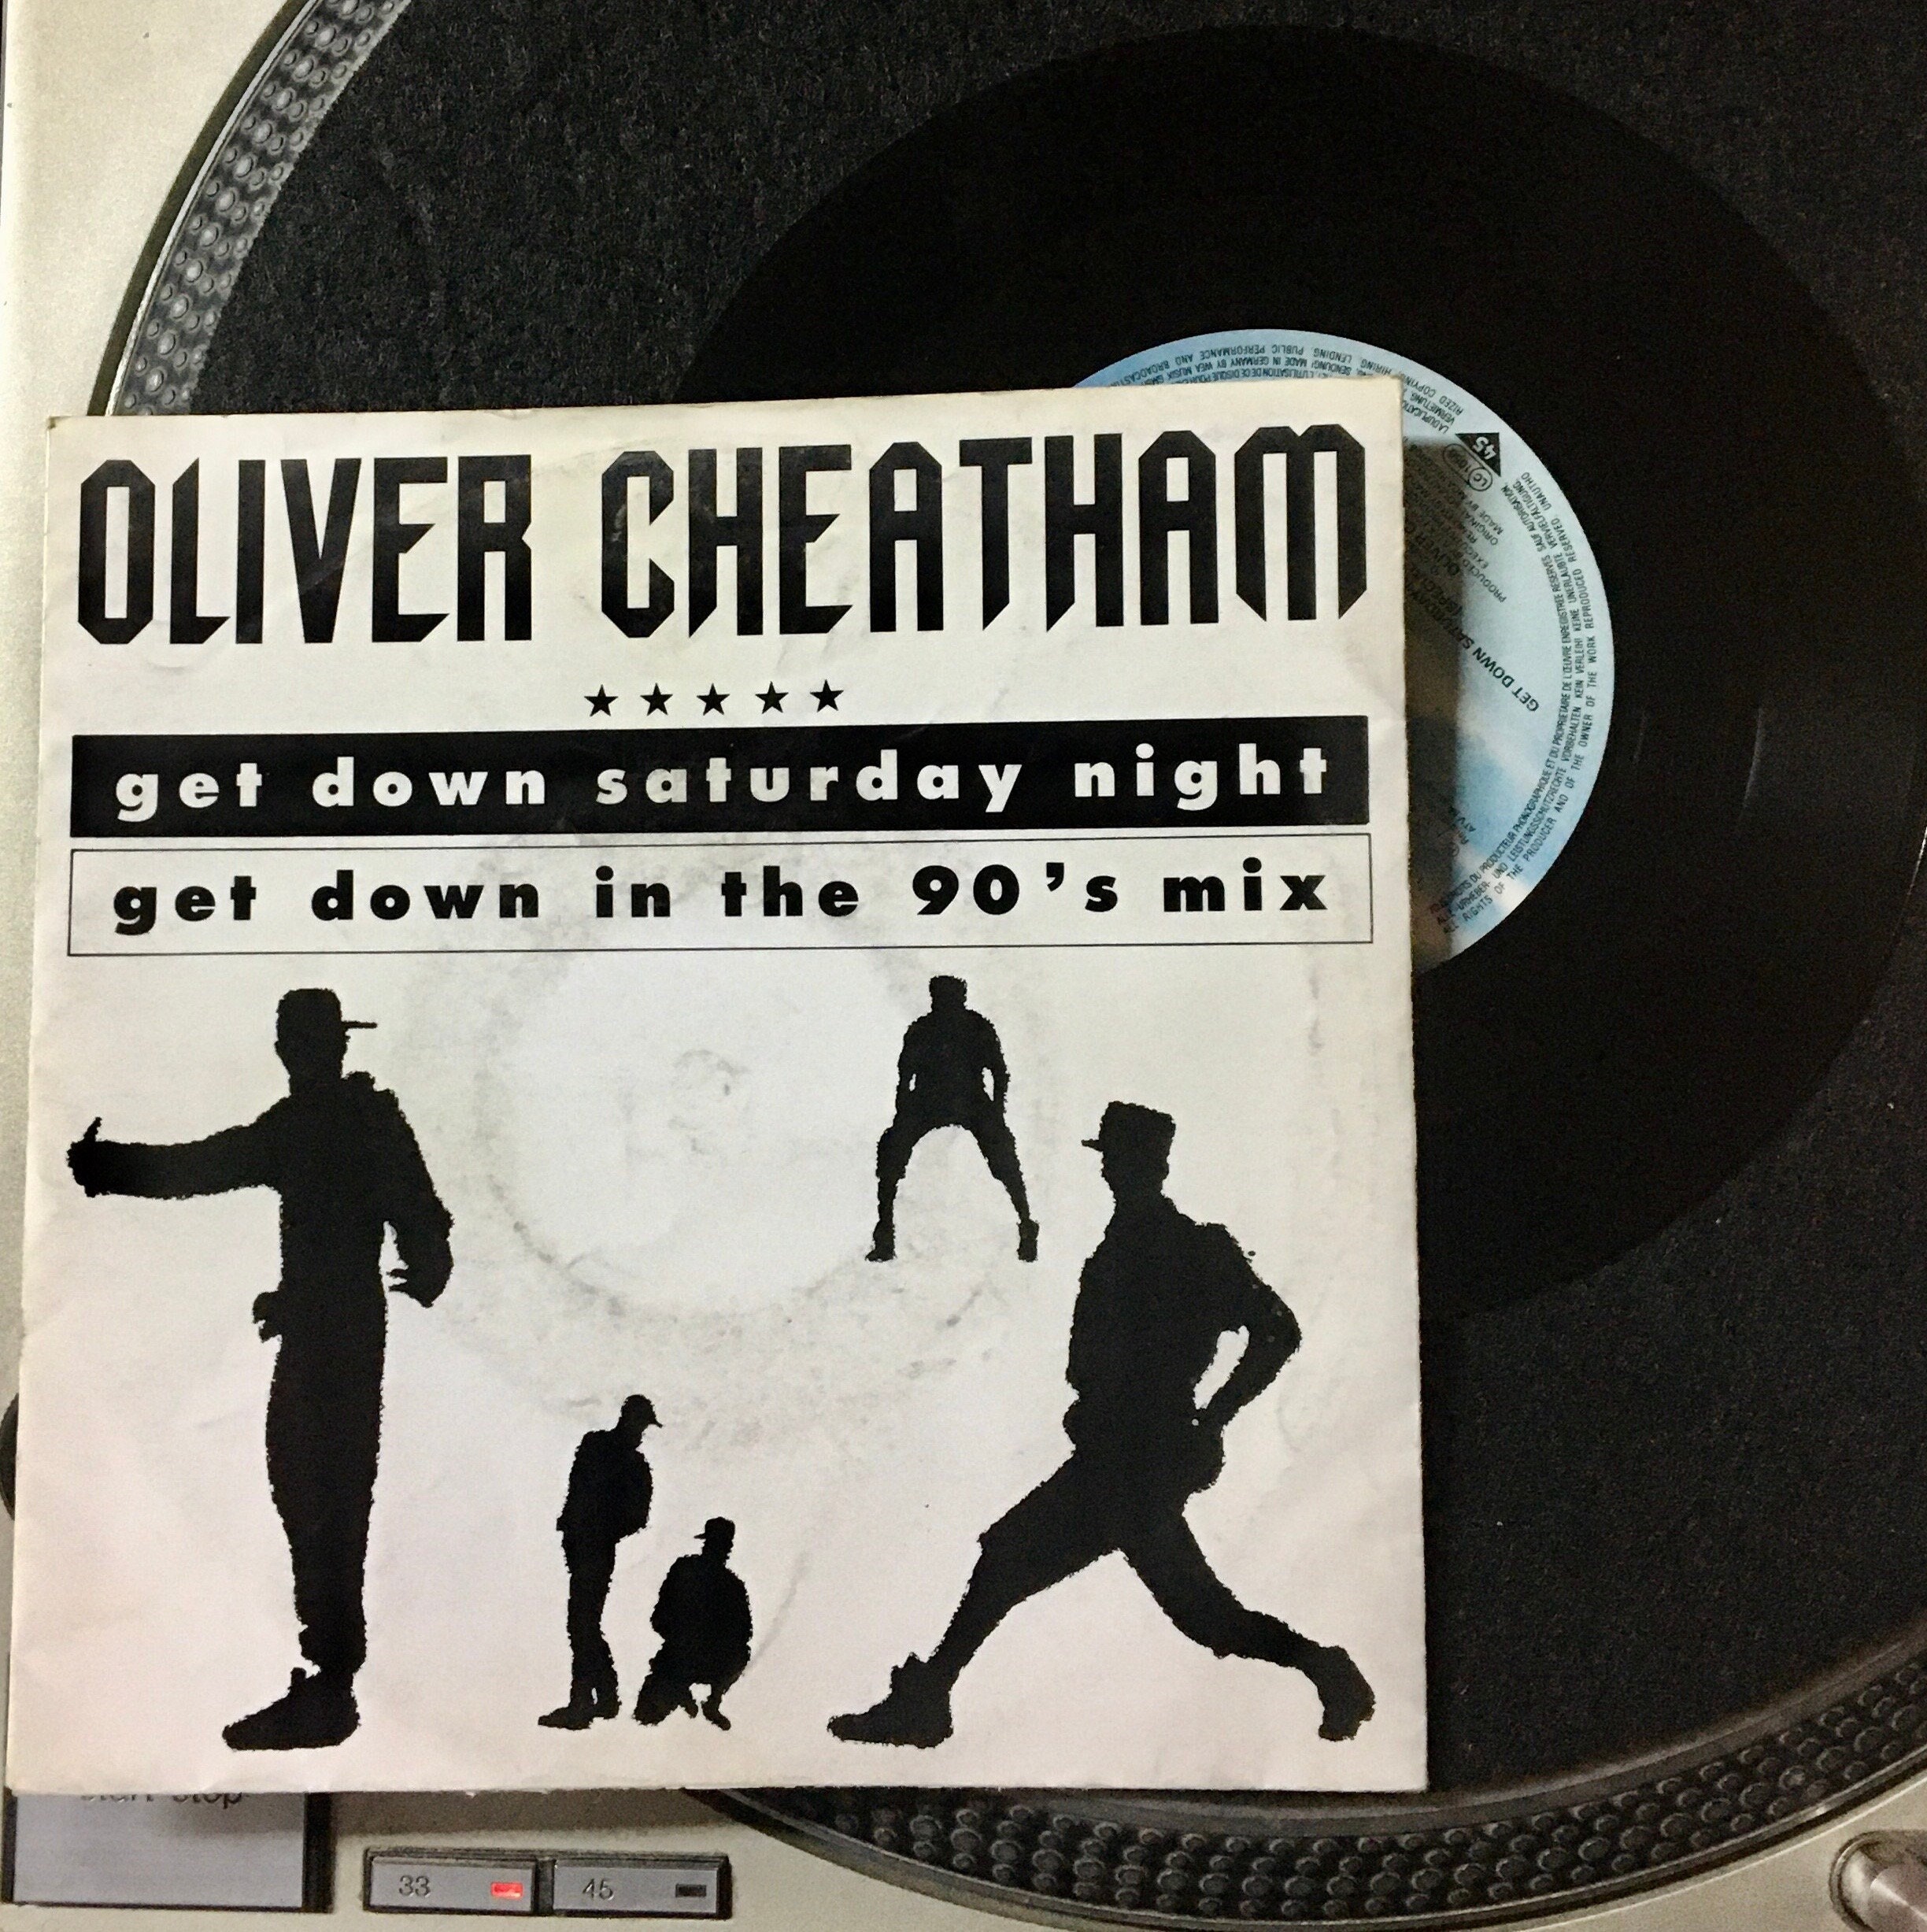 1990 Oliver Cheatham Get Saturday Night get in - Etsy